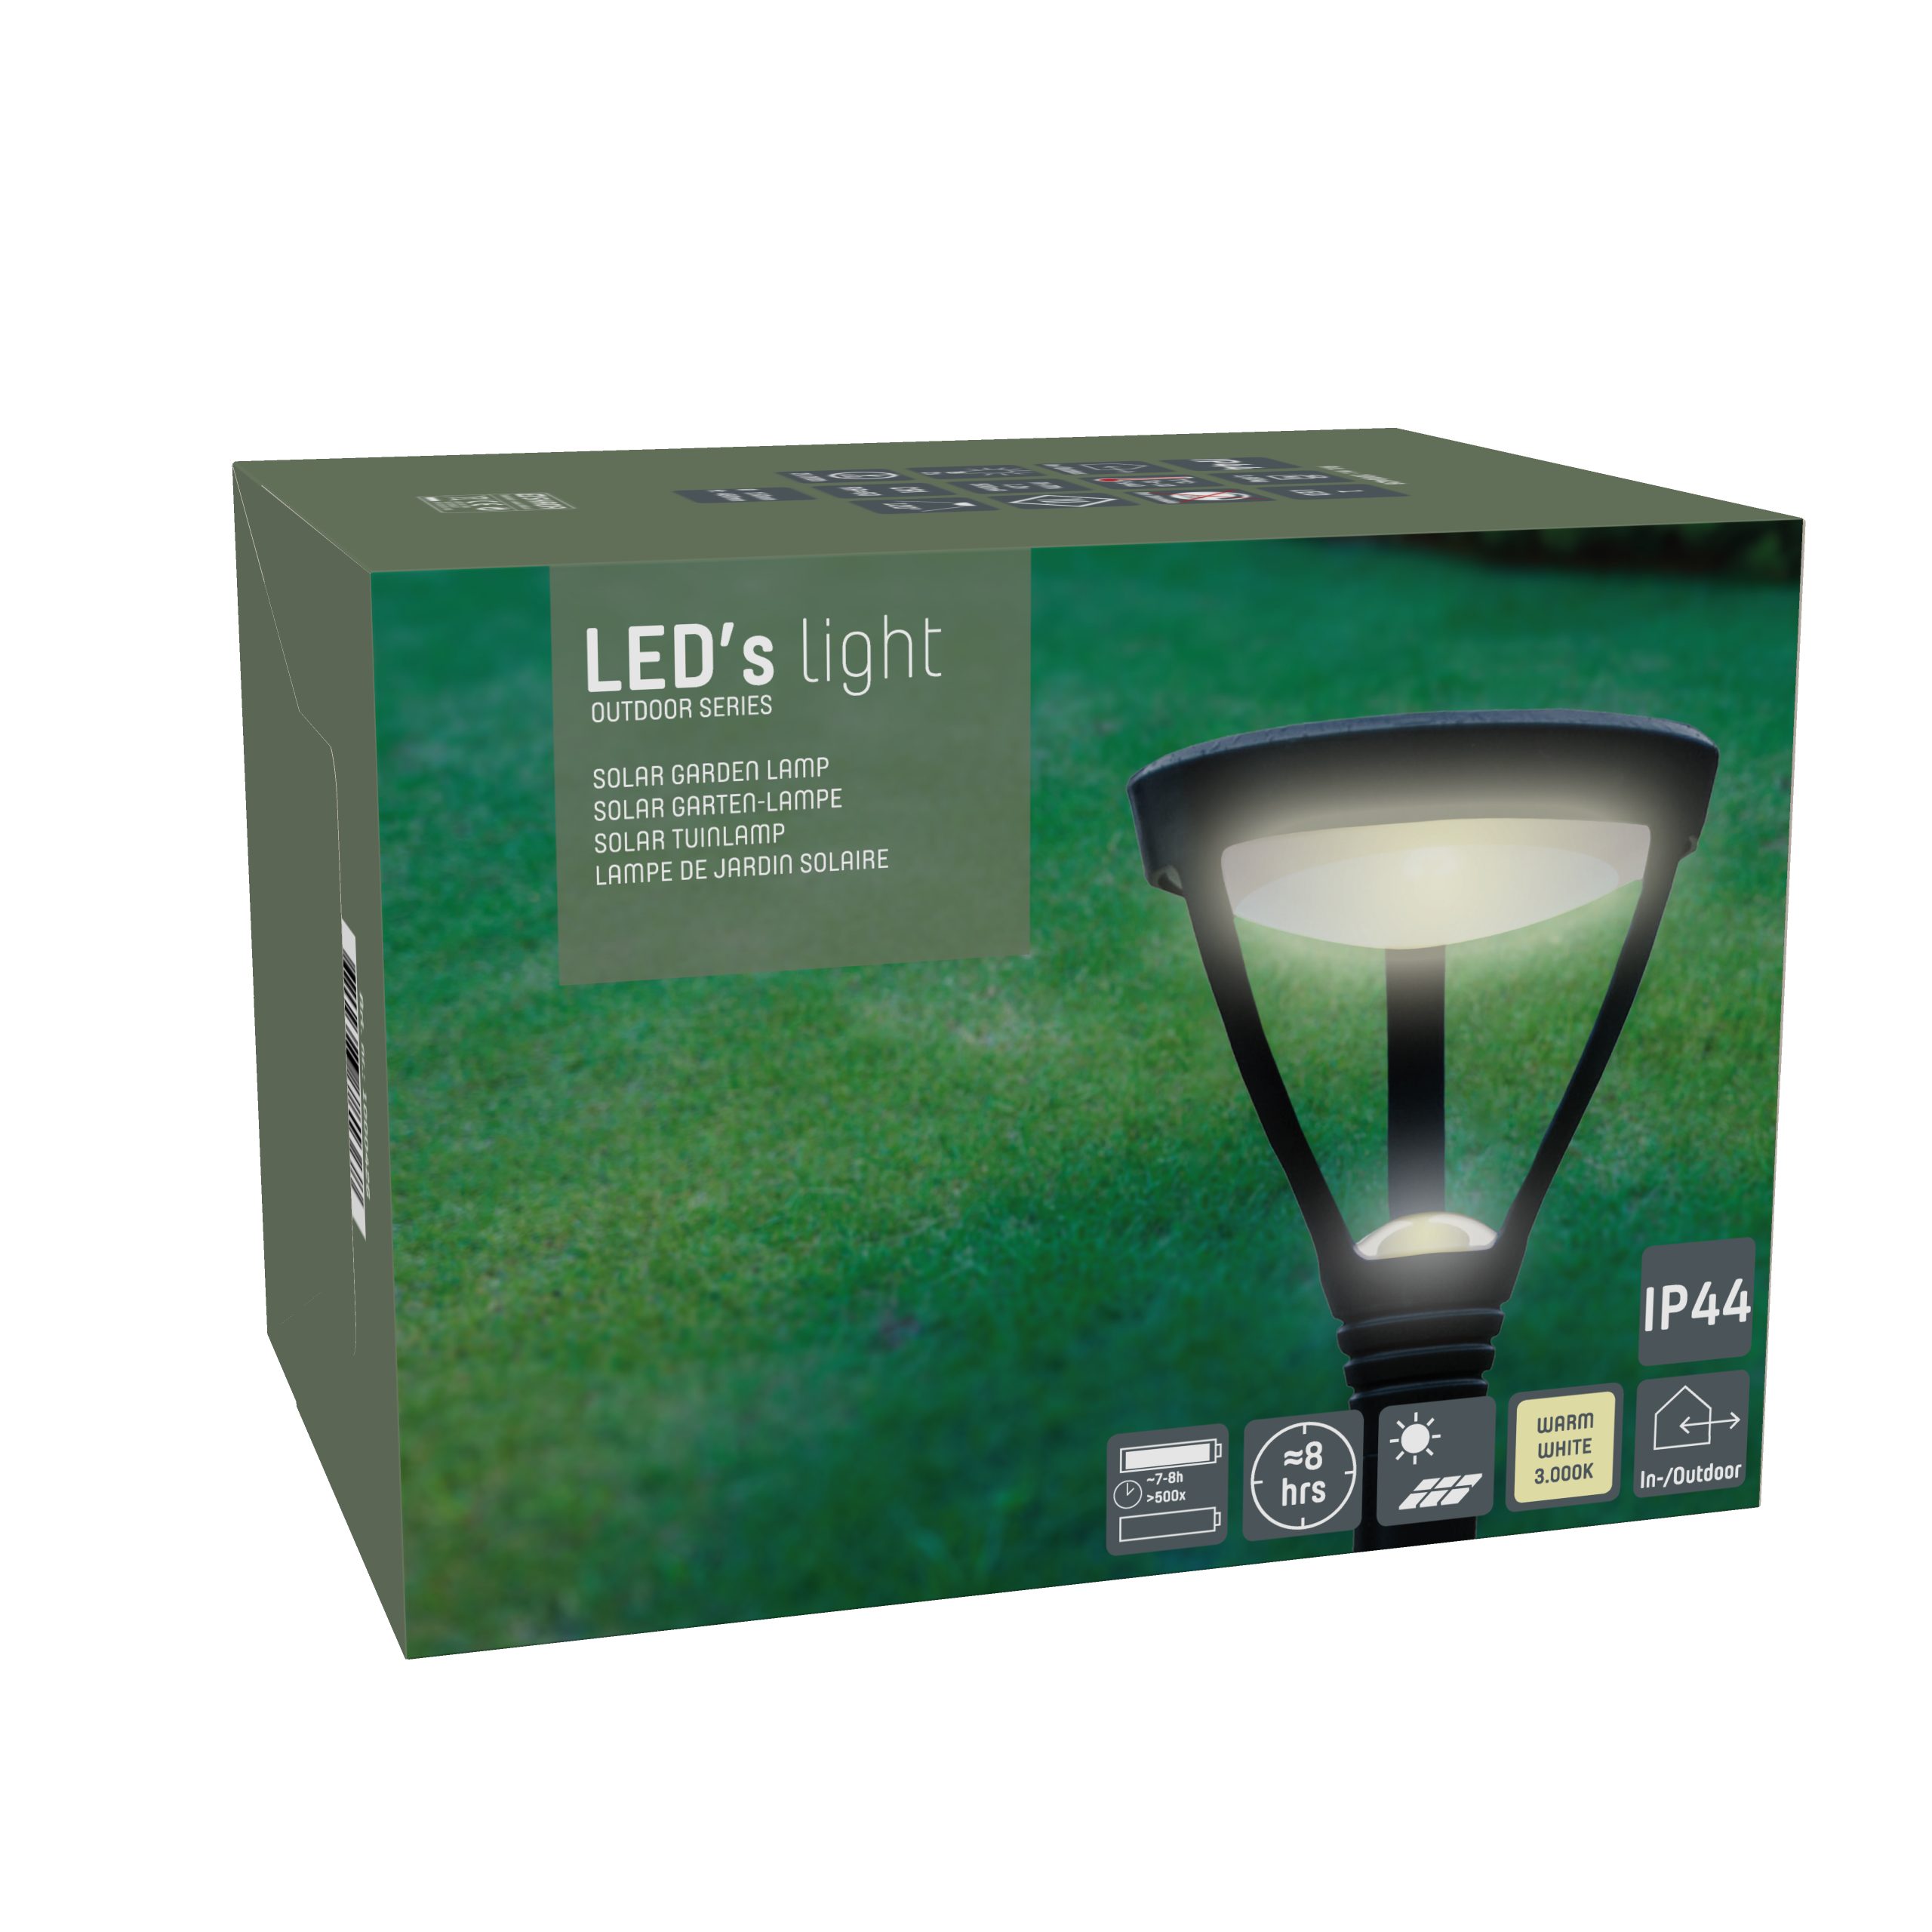 LED-Designleuchte, 1000426 warmweiß mit IP44 LED LED, Erdspieß 15x48cm Solarleuchte LED's Solar light